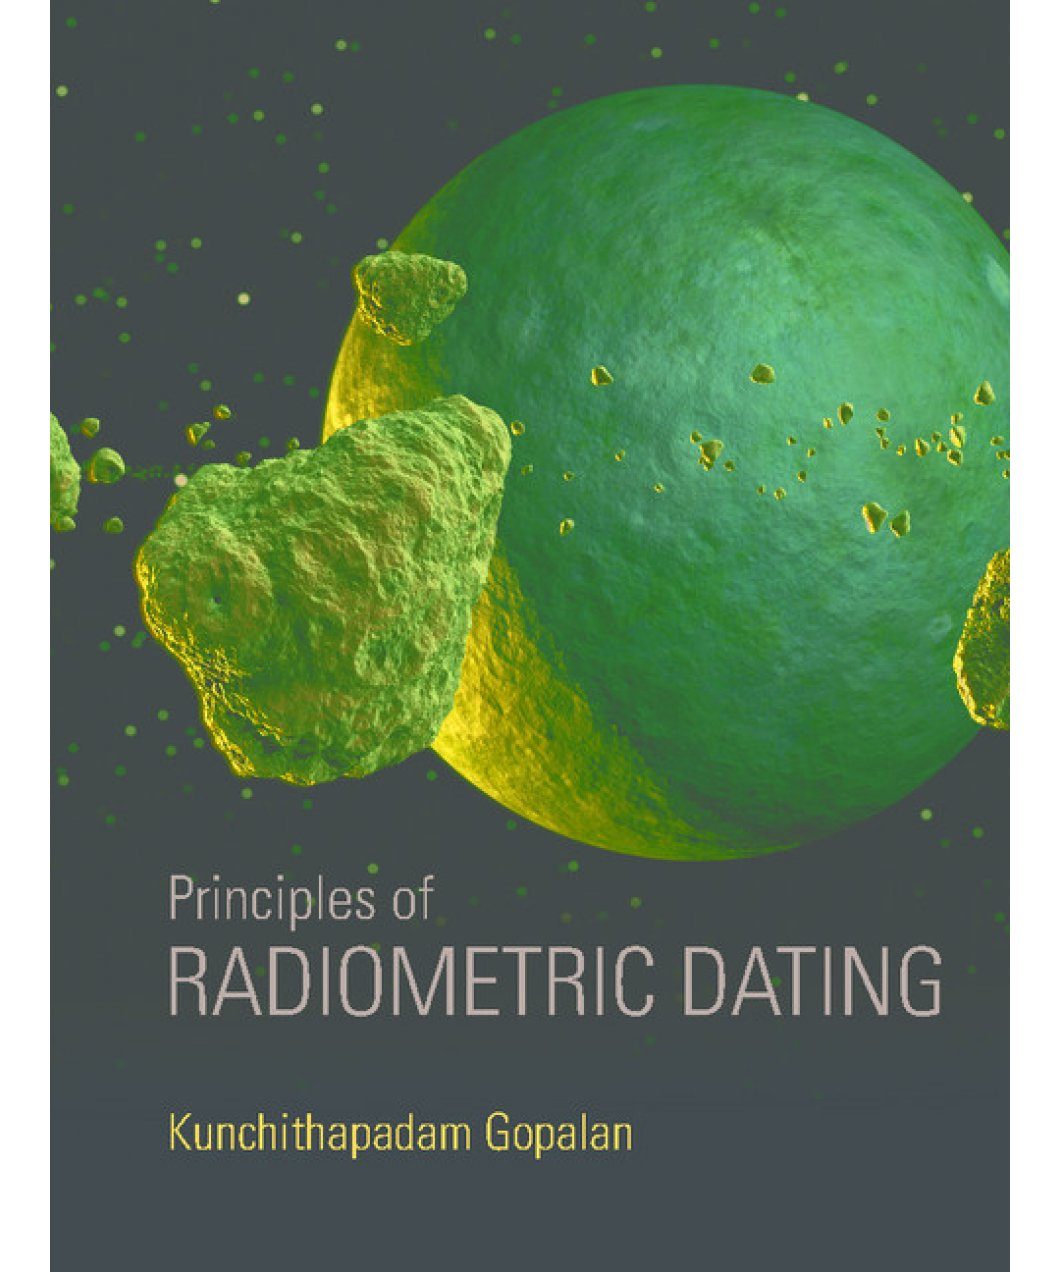 Radiometric dating of moon rocks